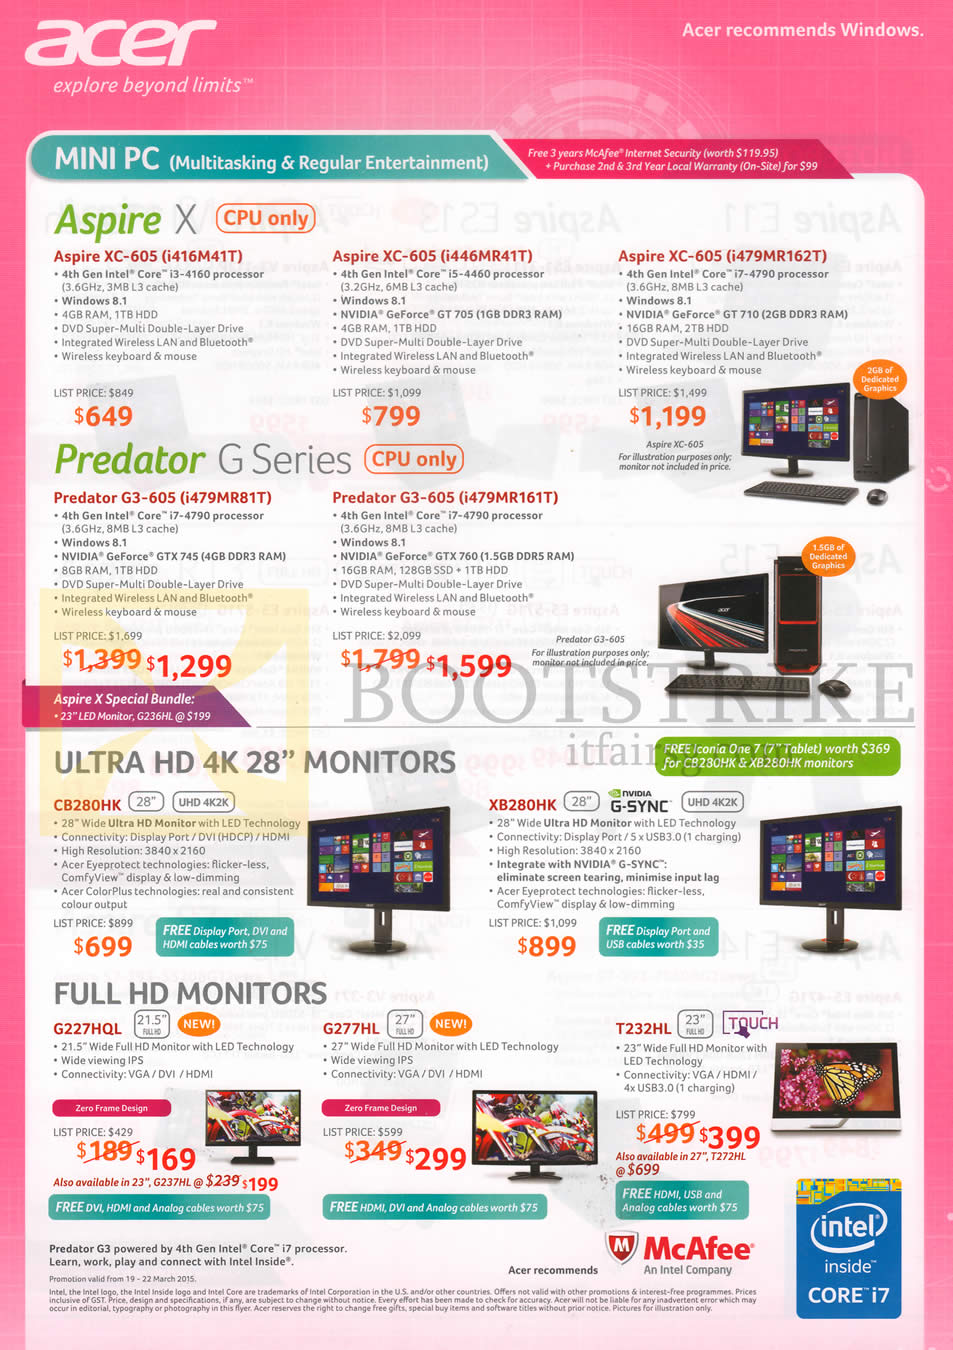 IT SHOW 2015 price list image brochure of Acer Desktop PCs, Monitors, Aspire XC-605, Predator G3-605, 4K UHD CB280HK, XB280HK, G227HQL, G277HL, T232HL